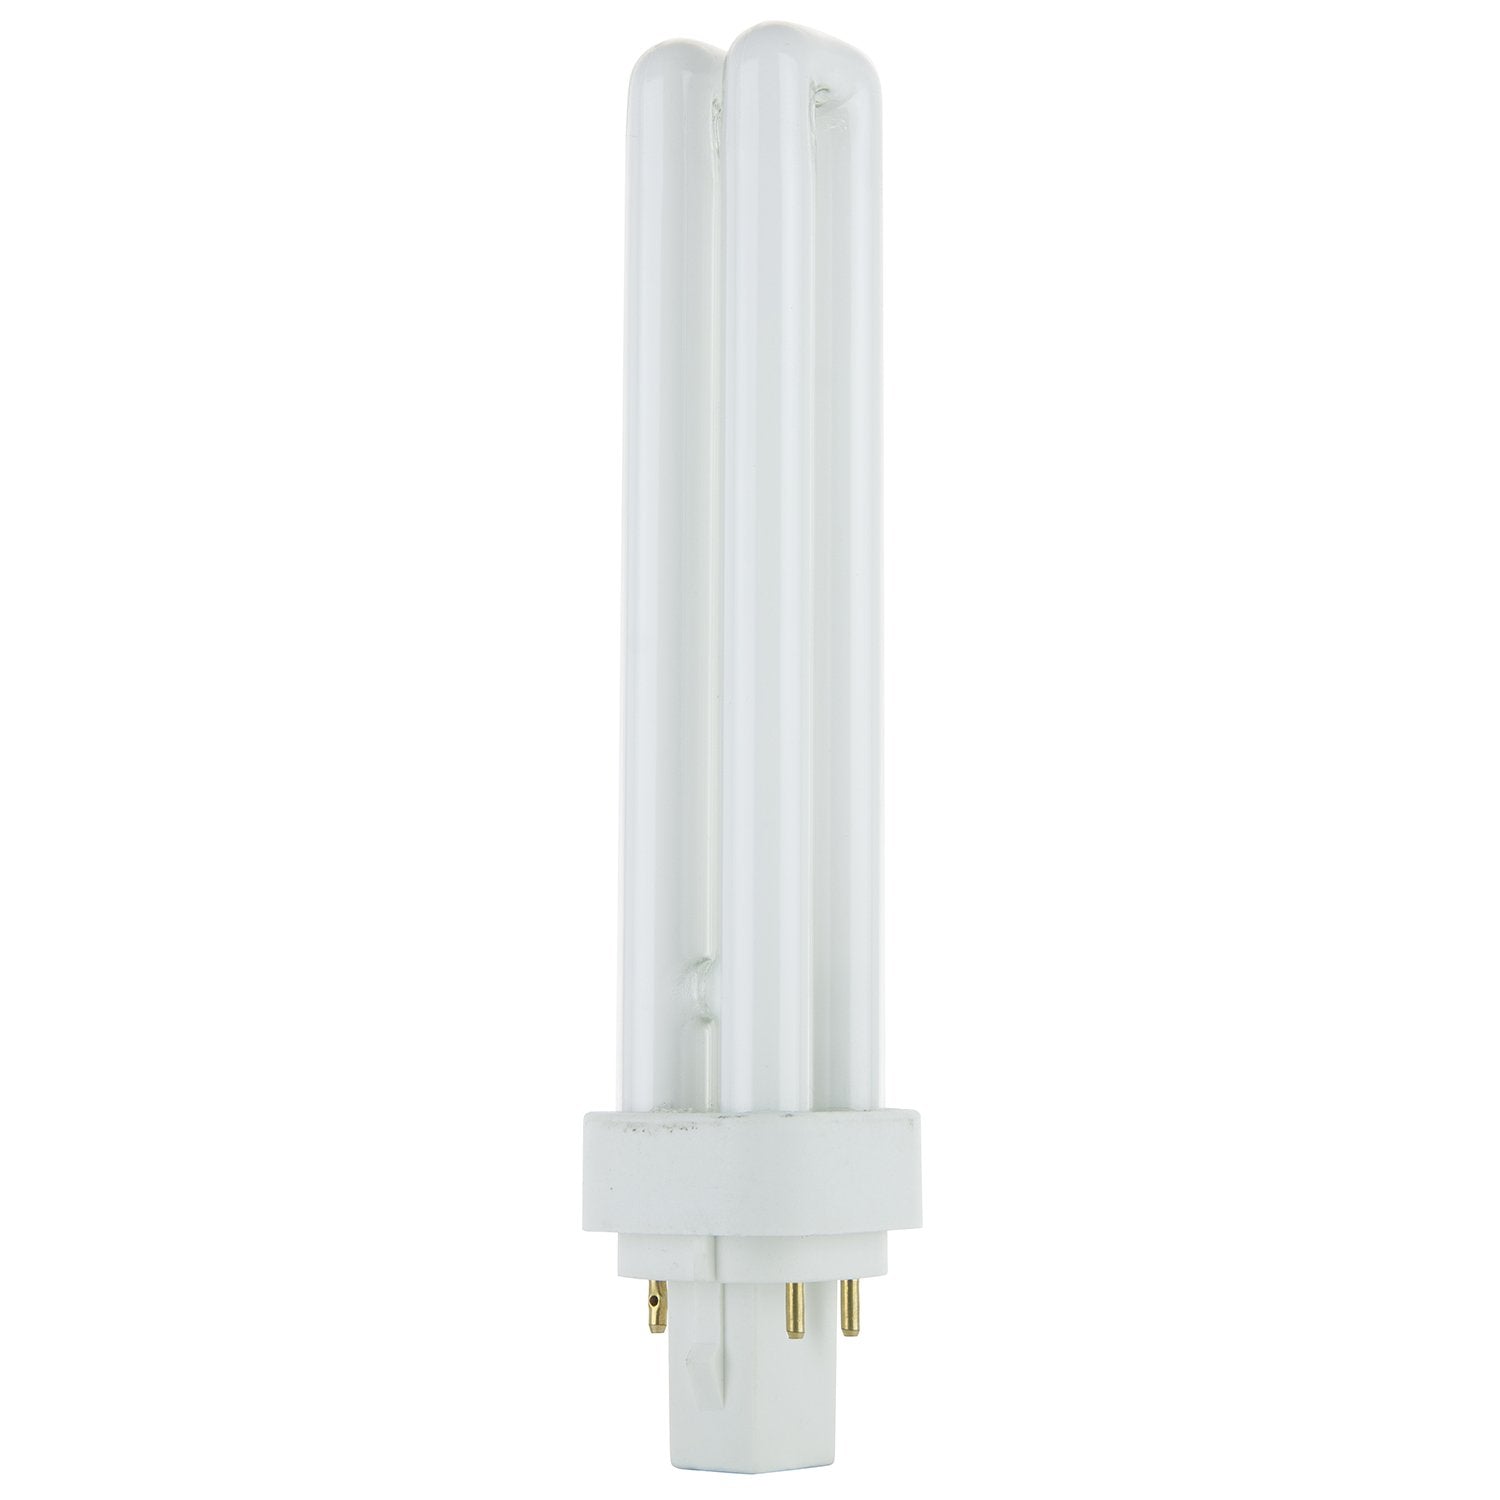 Sunlite PLD26/E/SP27K 26-Watt Compact Fluorescent Plug-In 4-Pin Light Bulb, 2700K Color  - Like New